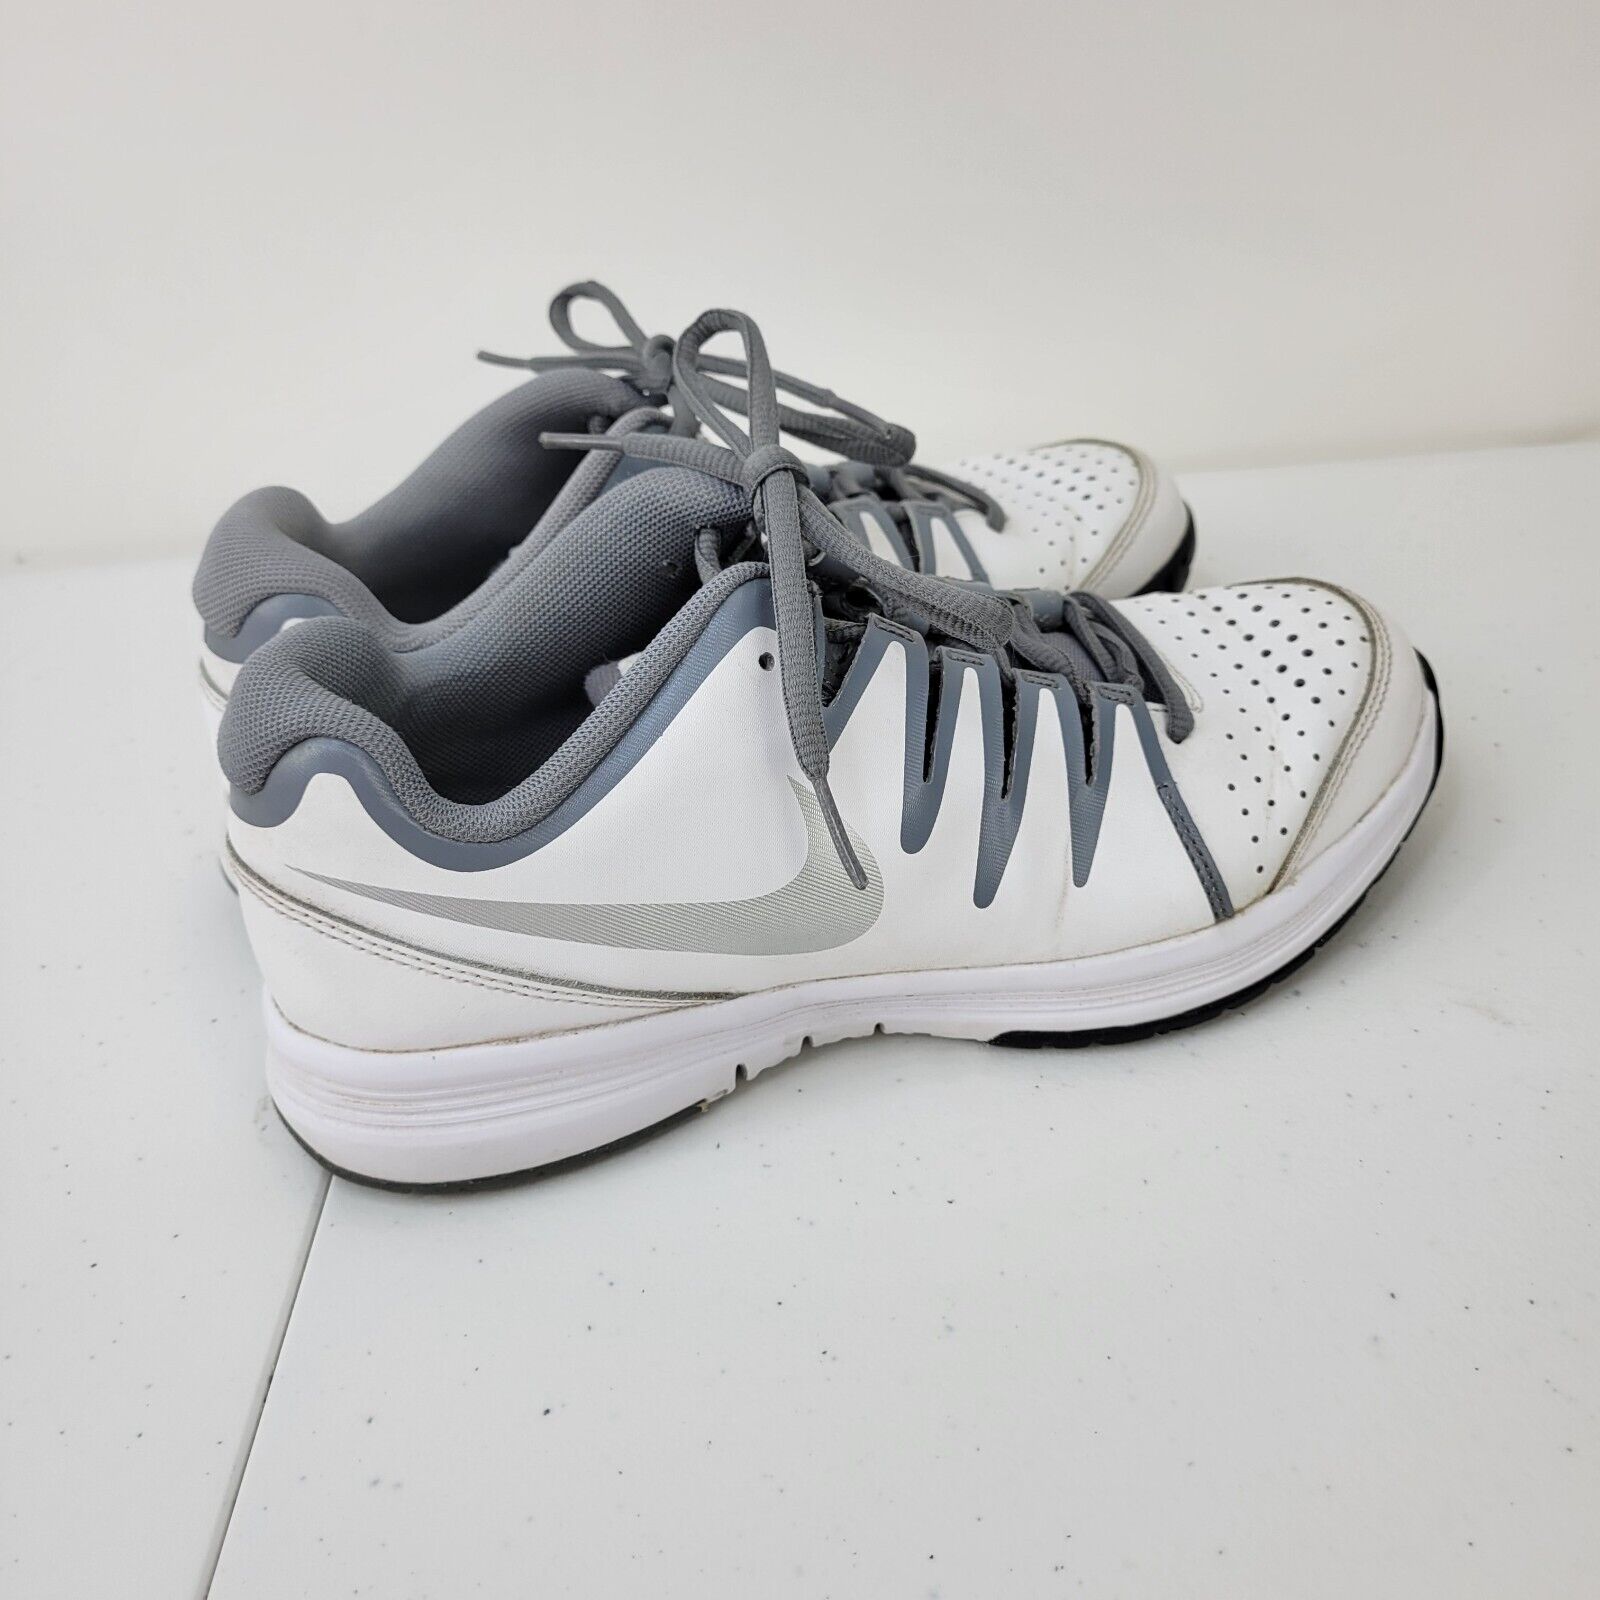 Nike Vapor Court Leather Womens Tennis Shoes Size 8.5 White Gray 631713-100